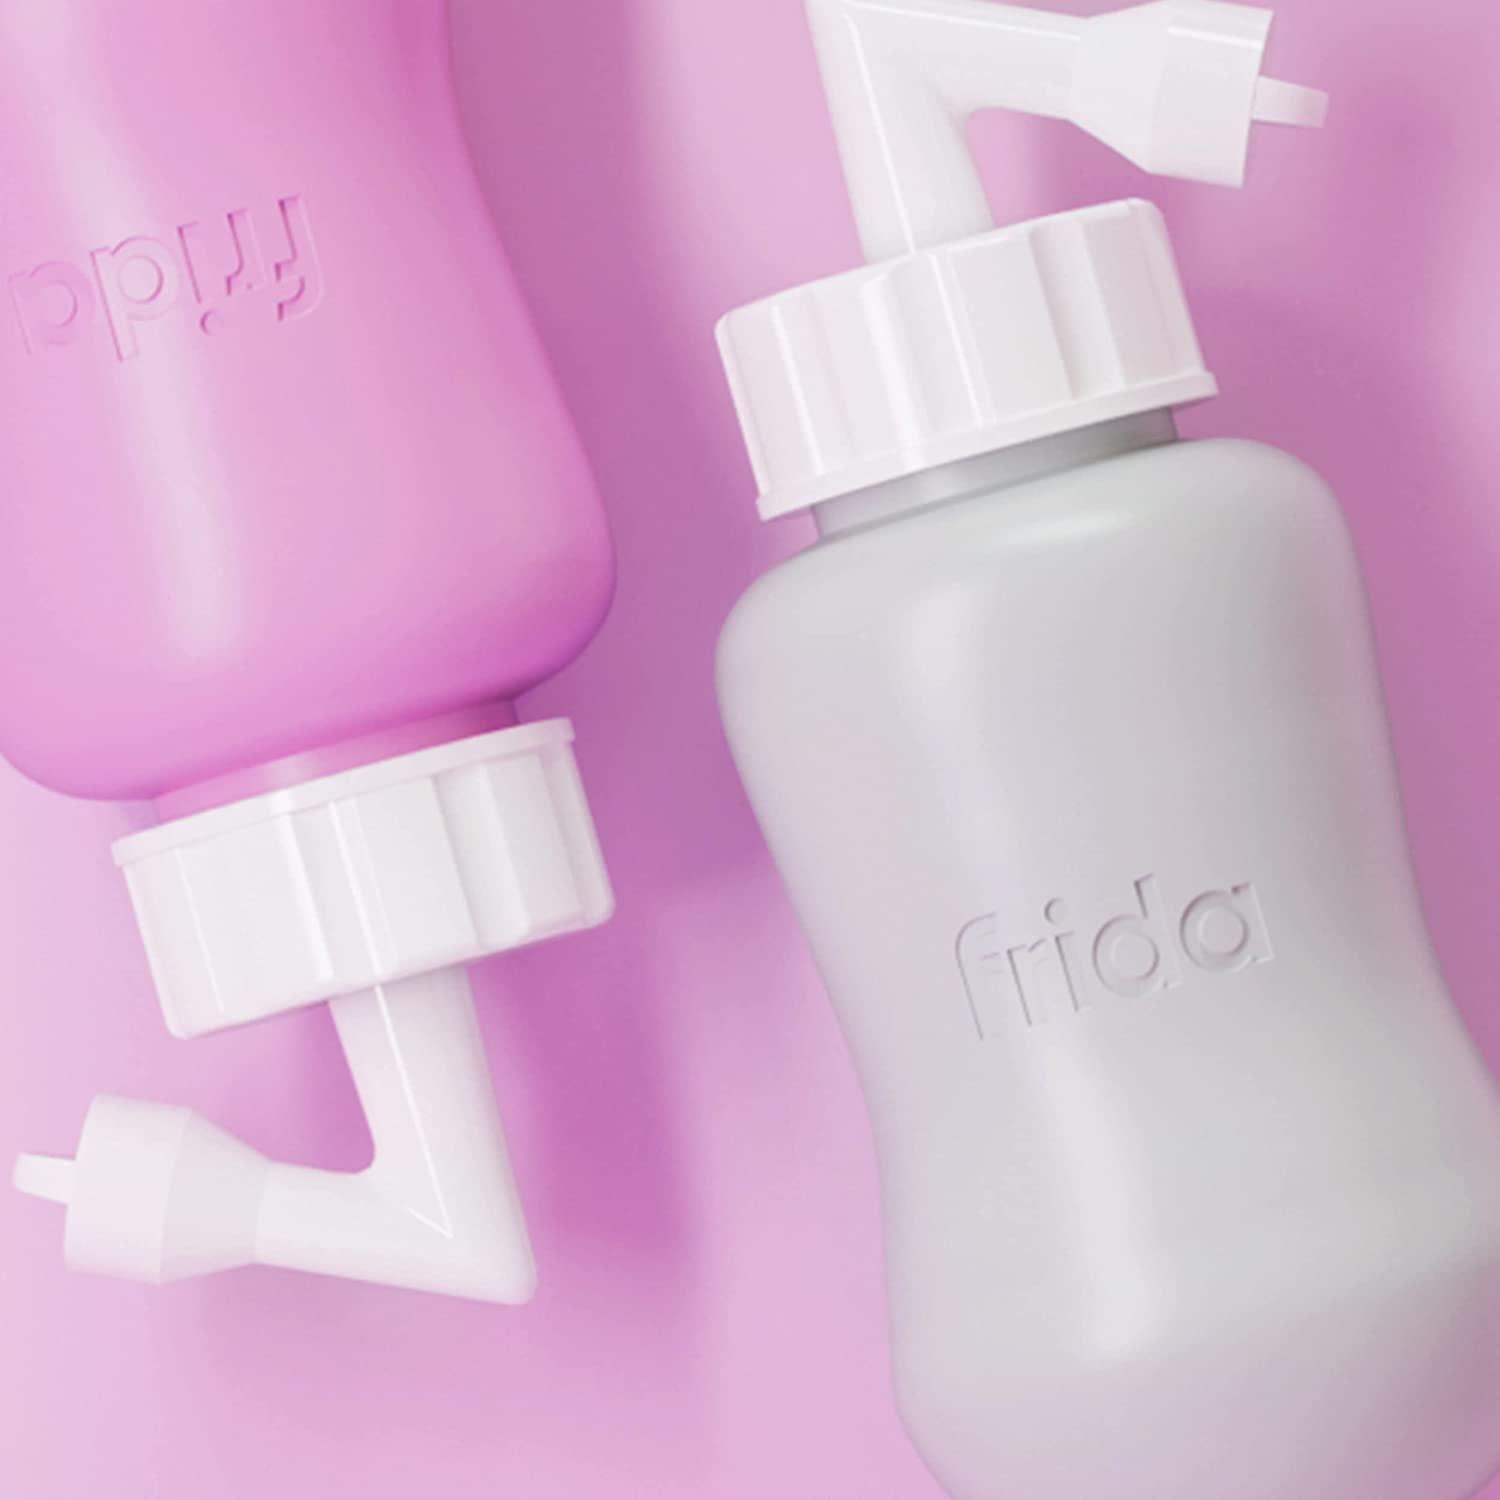 zitrads Peri Bottle 500ml for Postpartum Care, Portable Travel Bidet